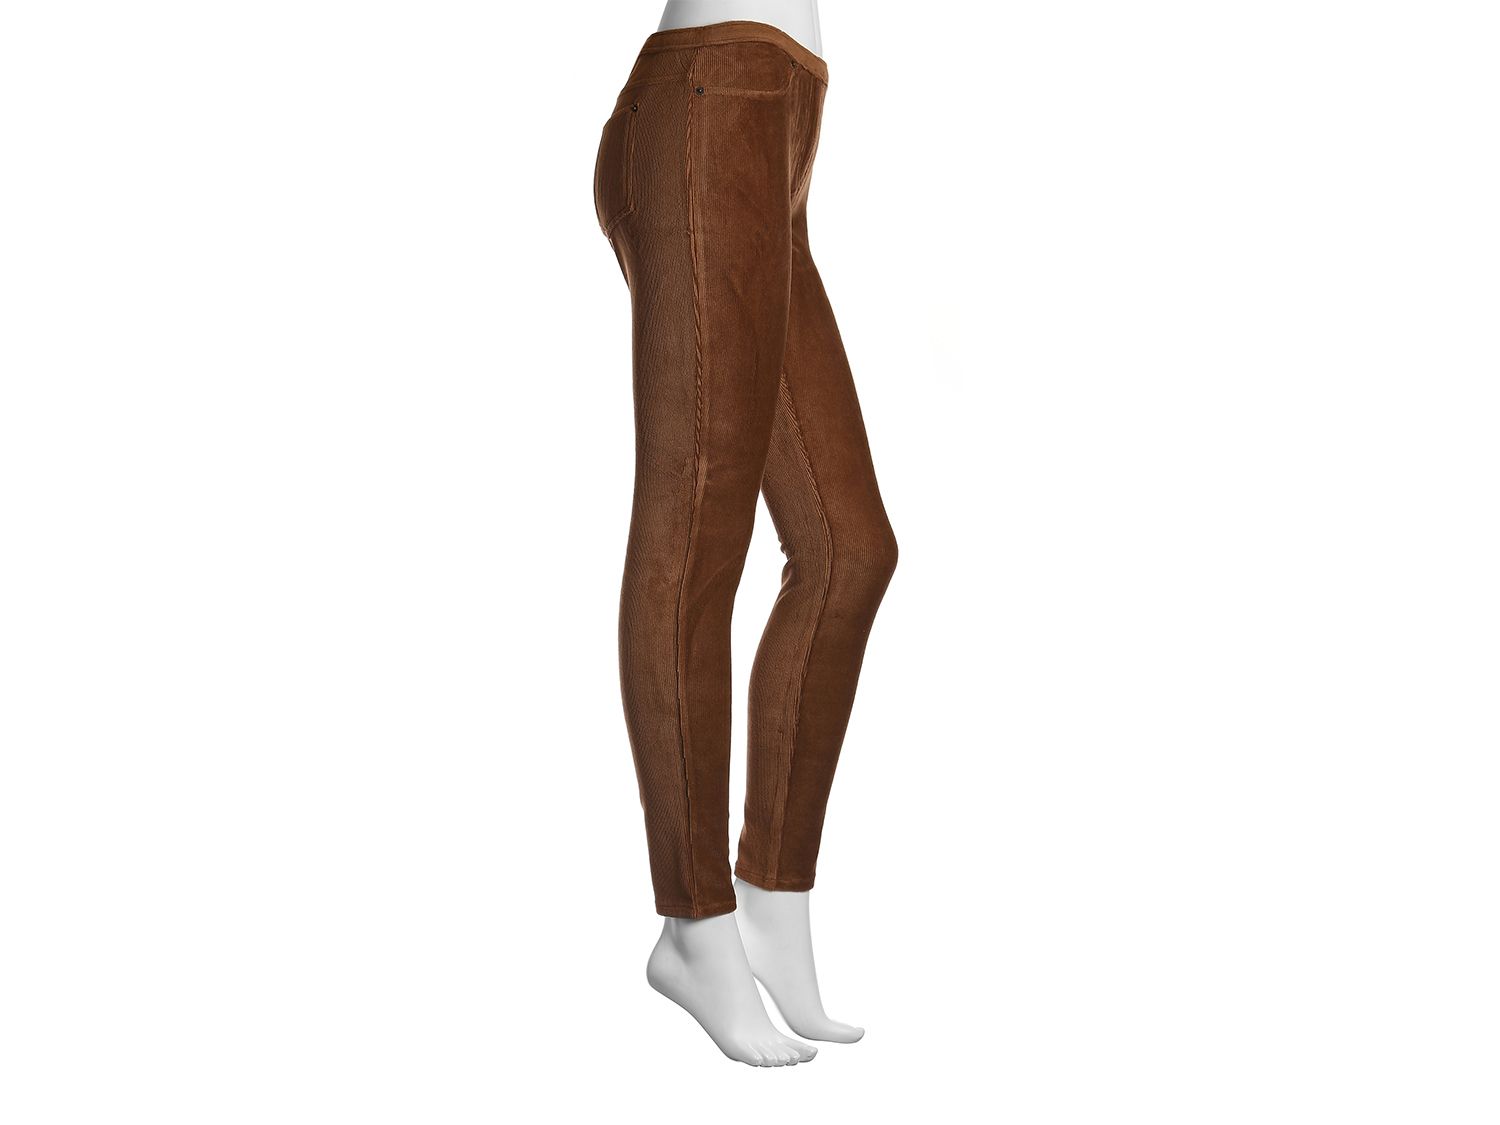 Striped leggings pants brown. Spodnie. Hurtownia-Kesi